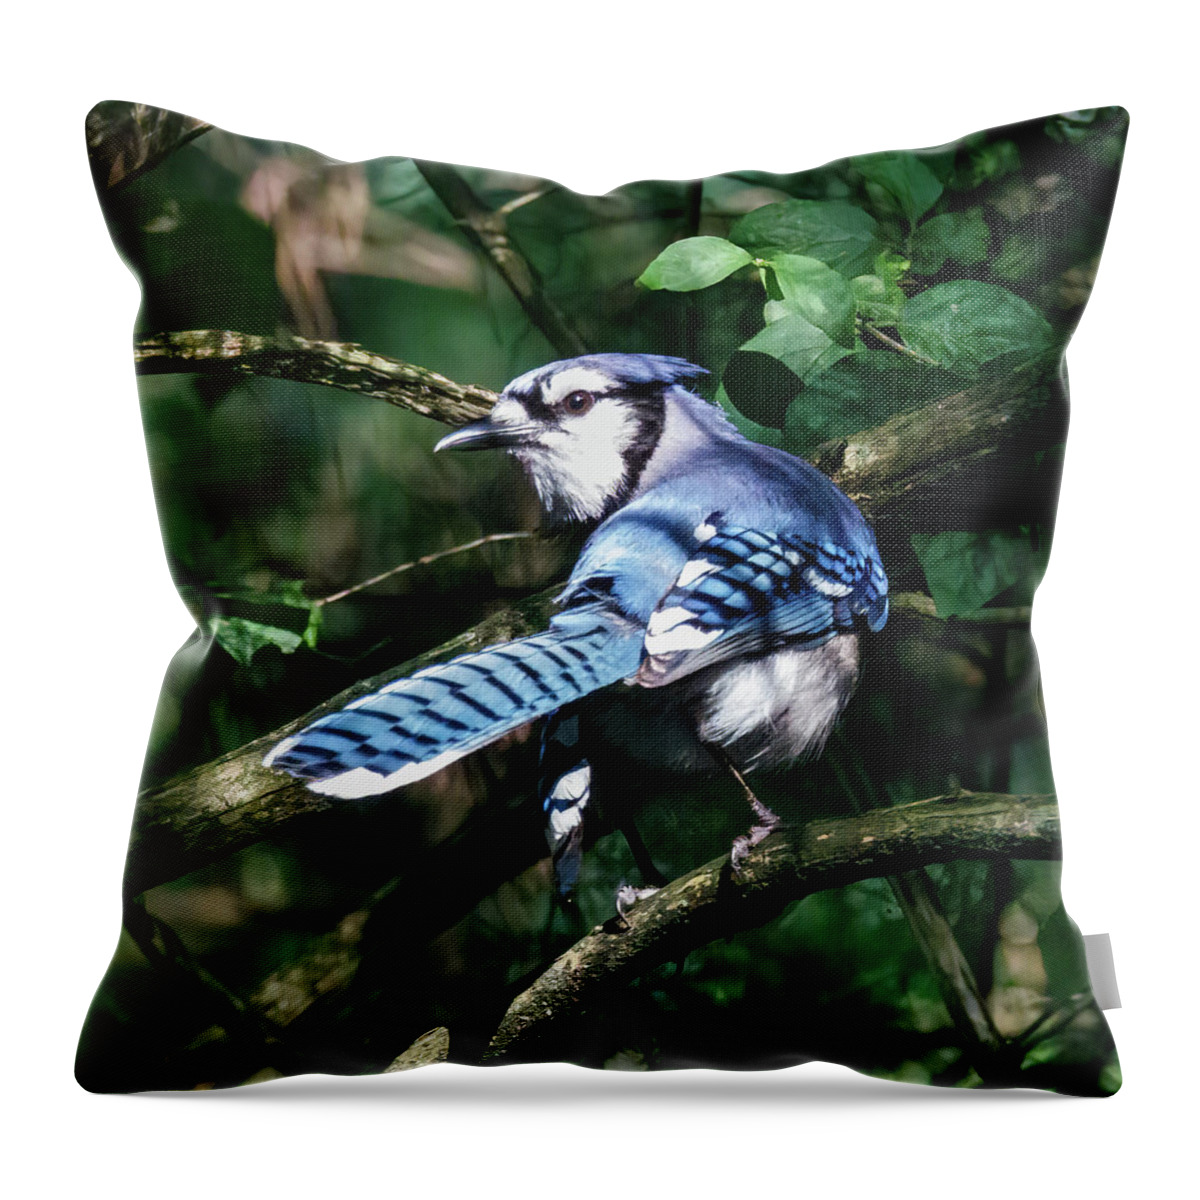 Bird Throw Pillow featuring the photograph Bluejay by David Beechum